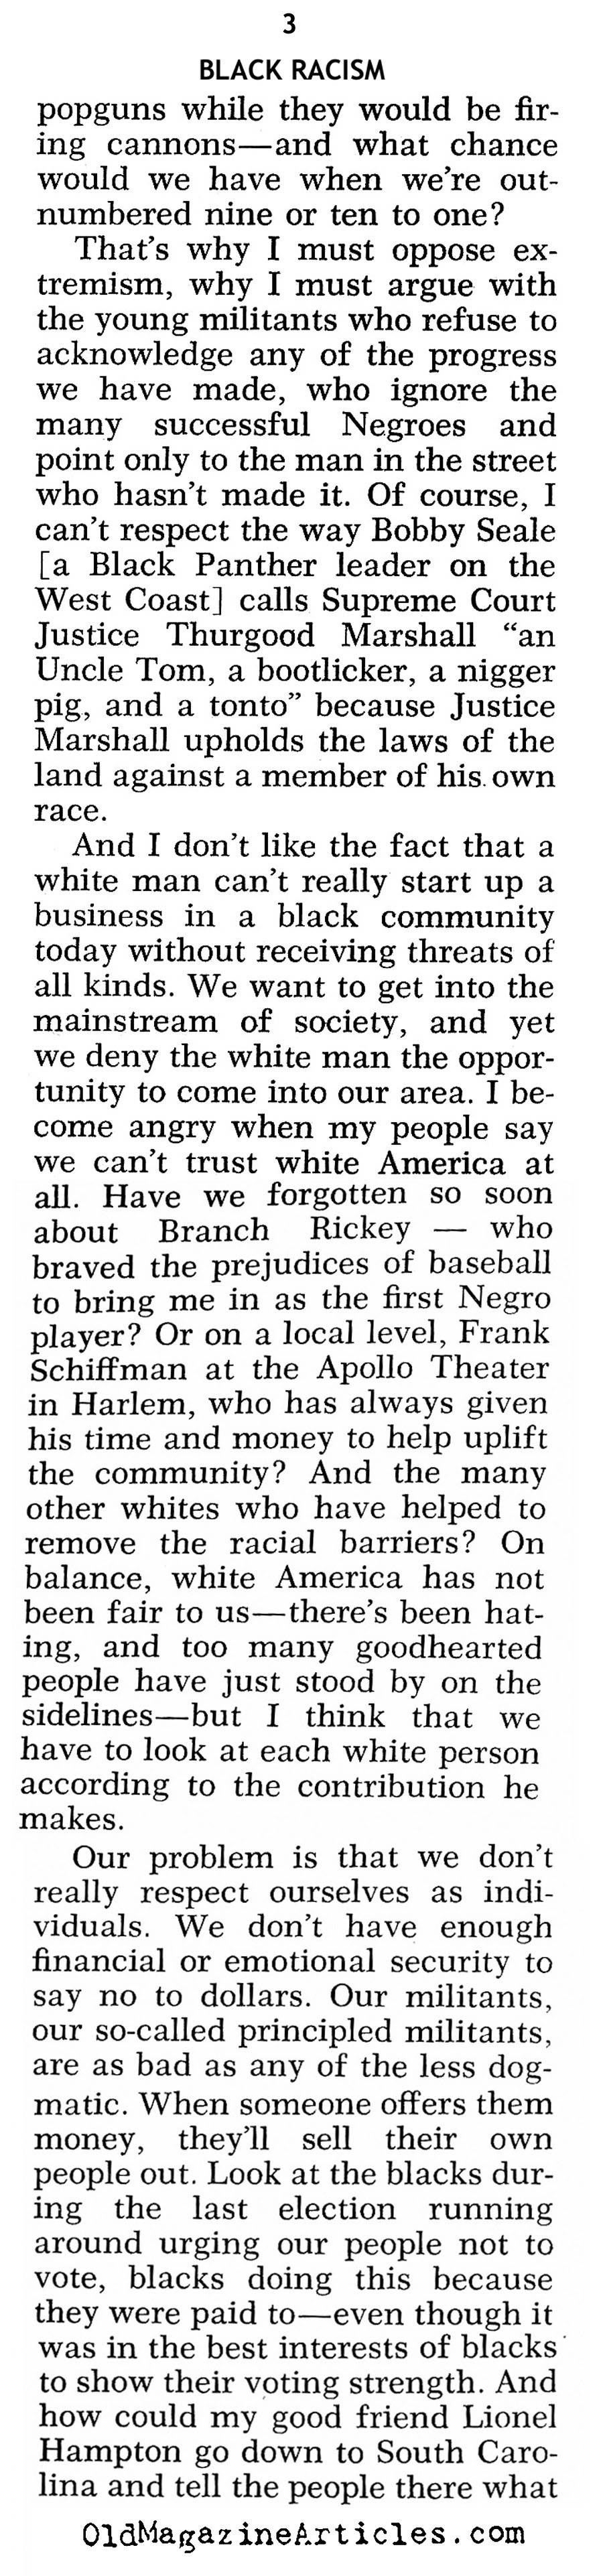 Black Racism (Pageant Magazine, 1969)